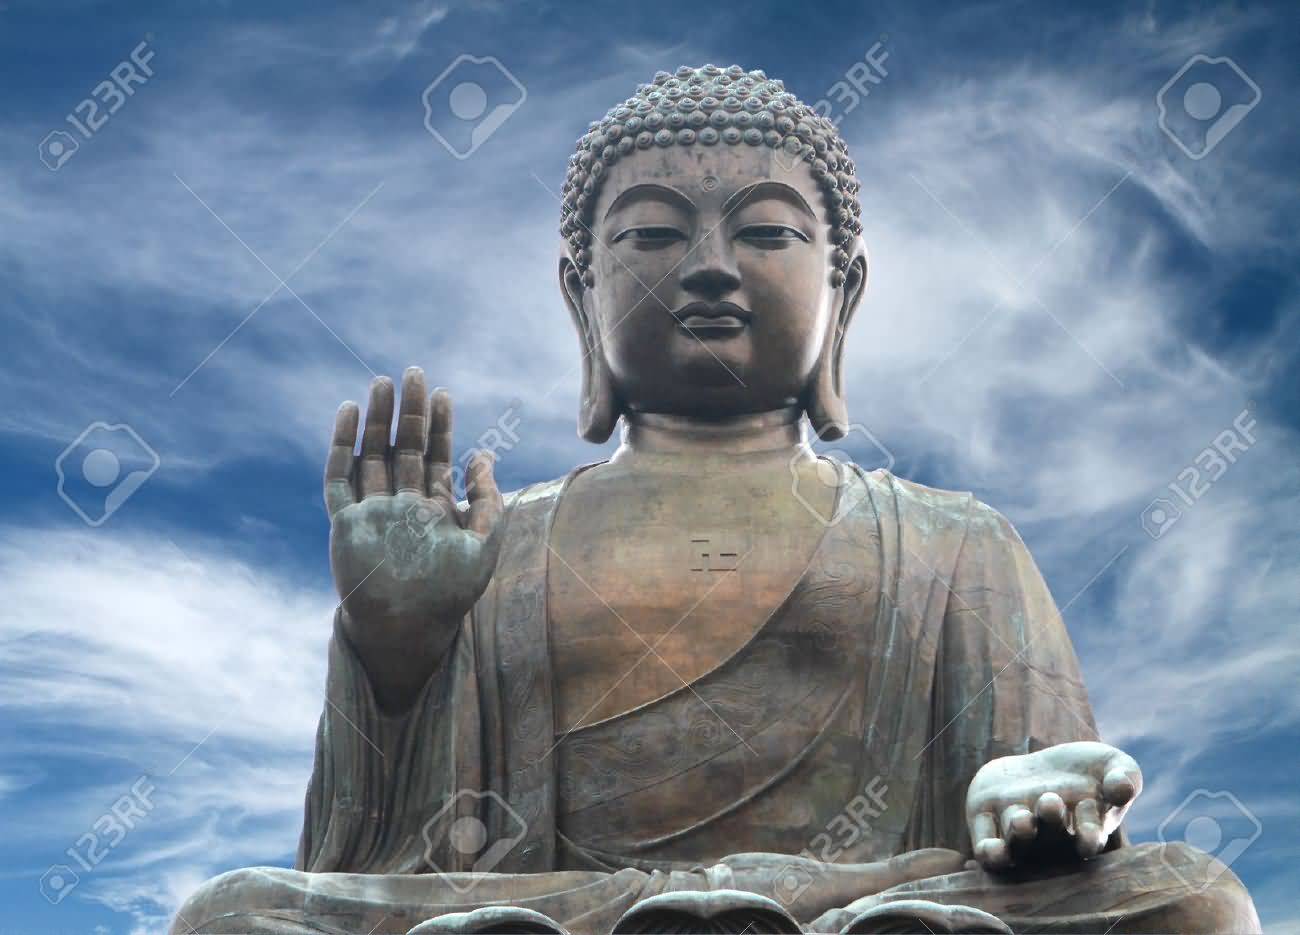 The Tian Tan Buddha In A Dramatic Sky Background